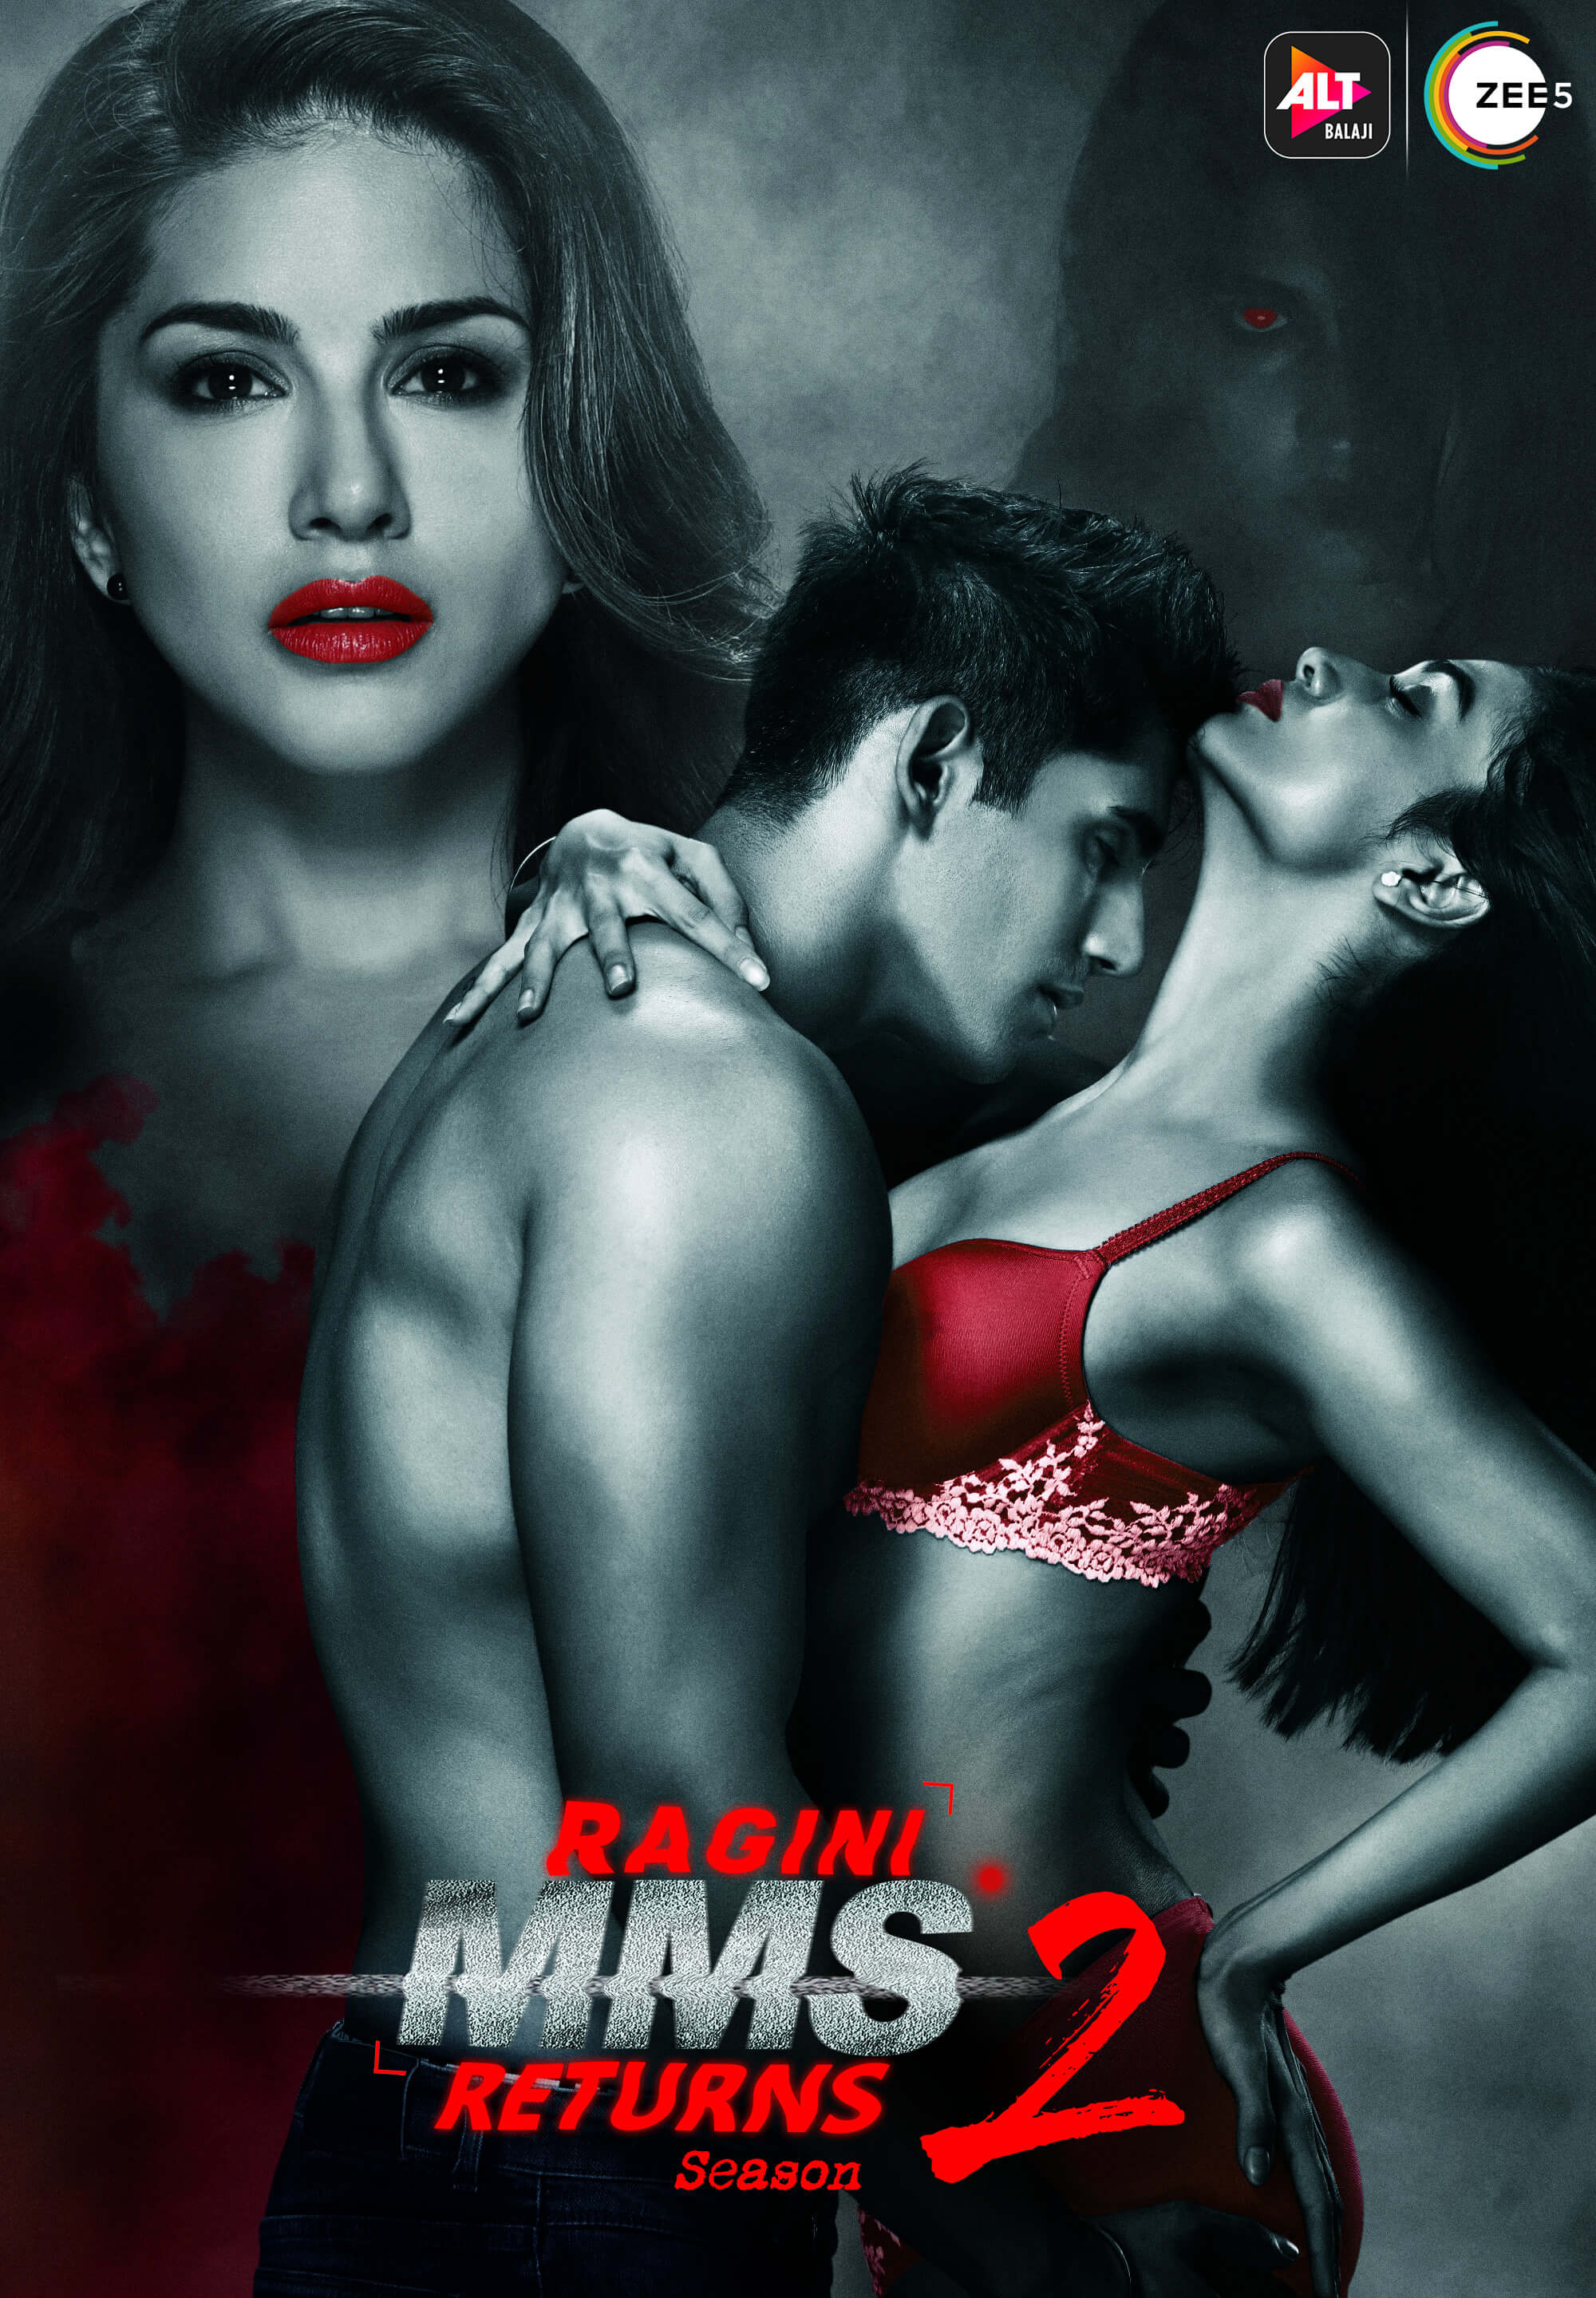 Ragini MMS Returns Season 02 every reviews and ratings Poster